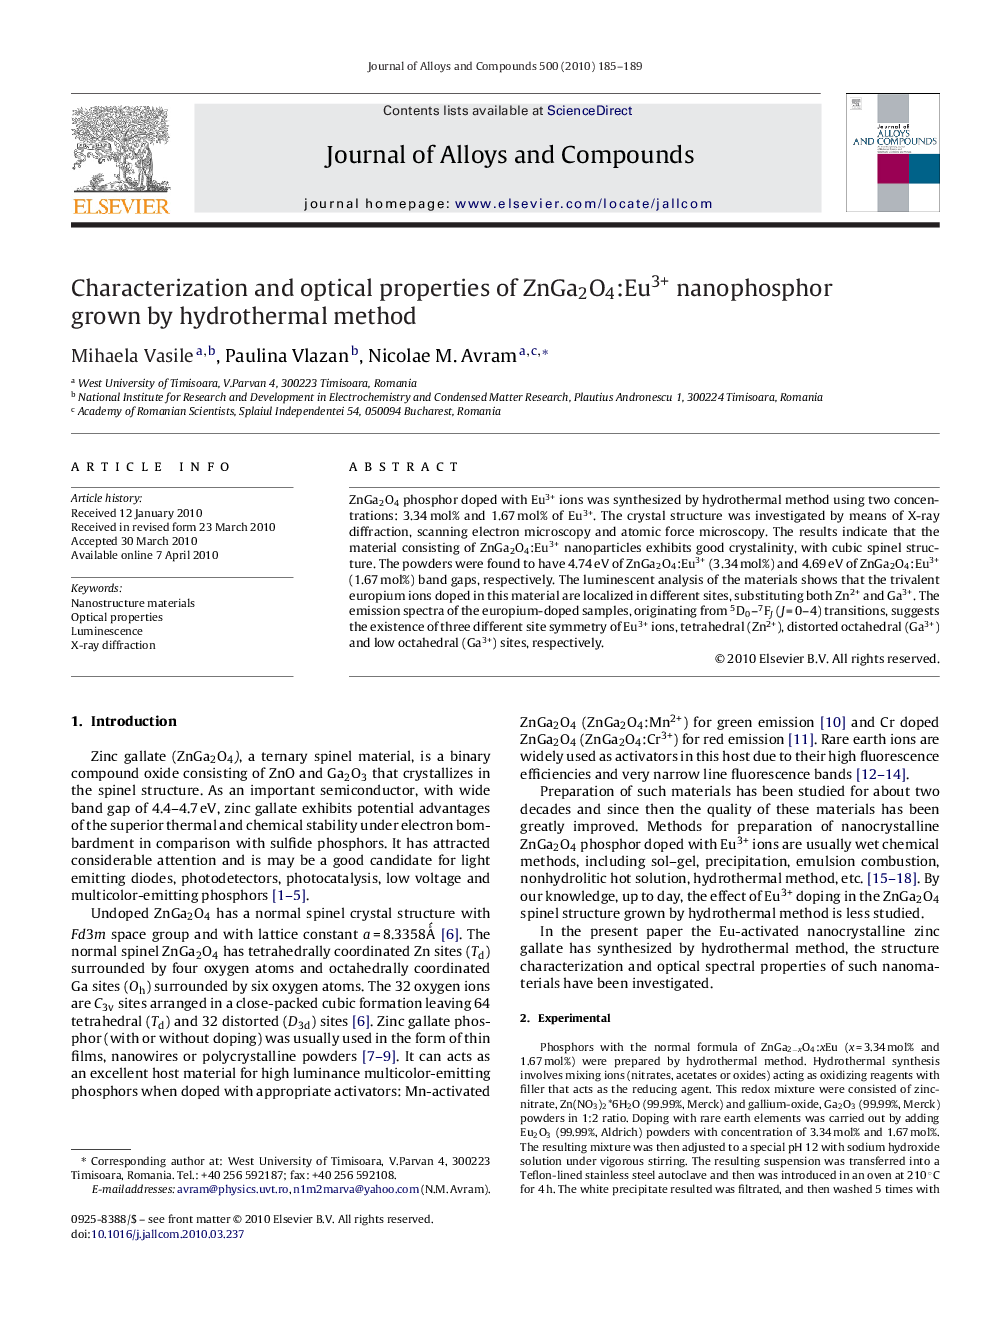 Characterization and optical properties of ZnGa2O4:Eu3+ nanophosphor grown by hydrothermal method